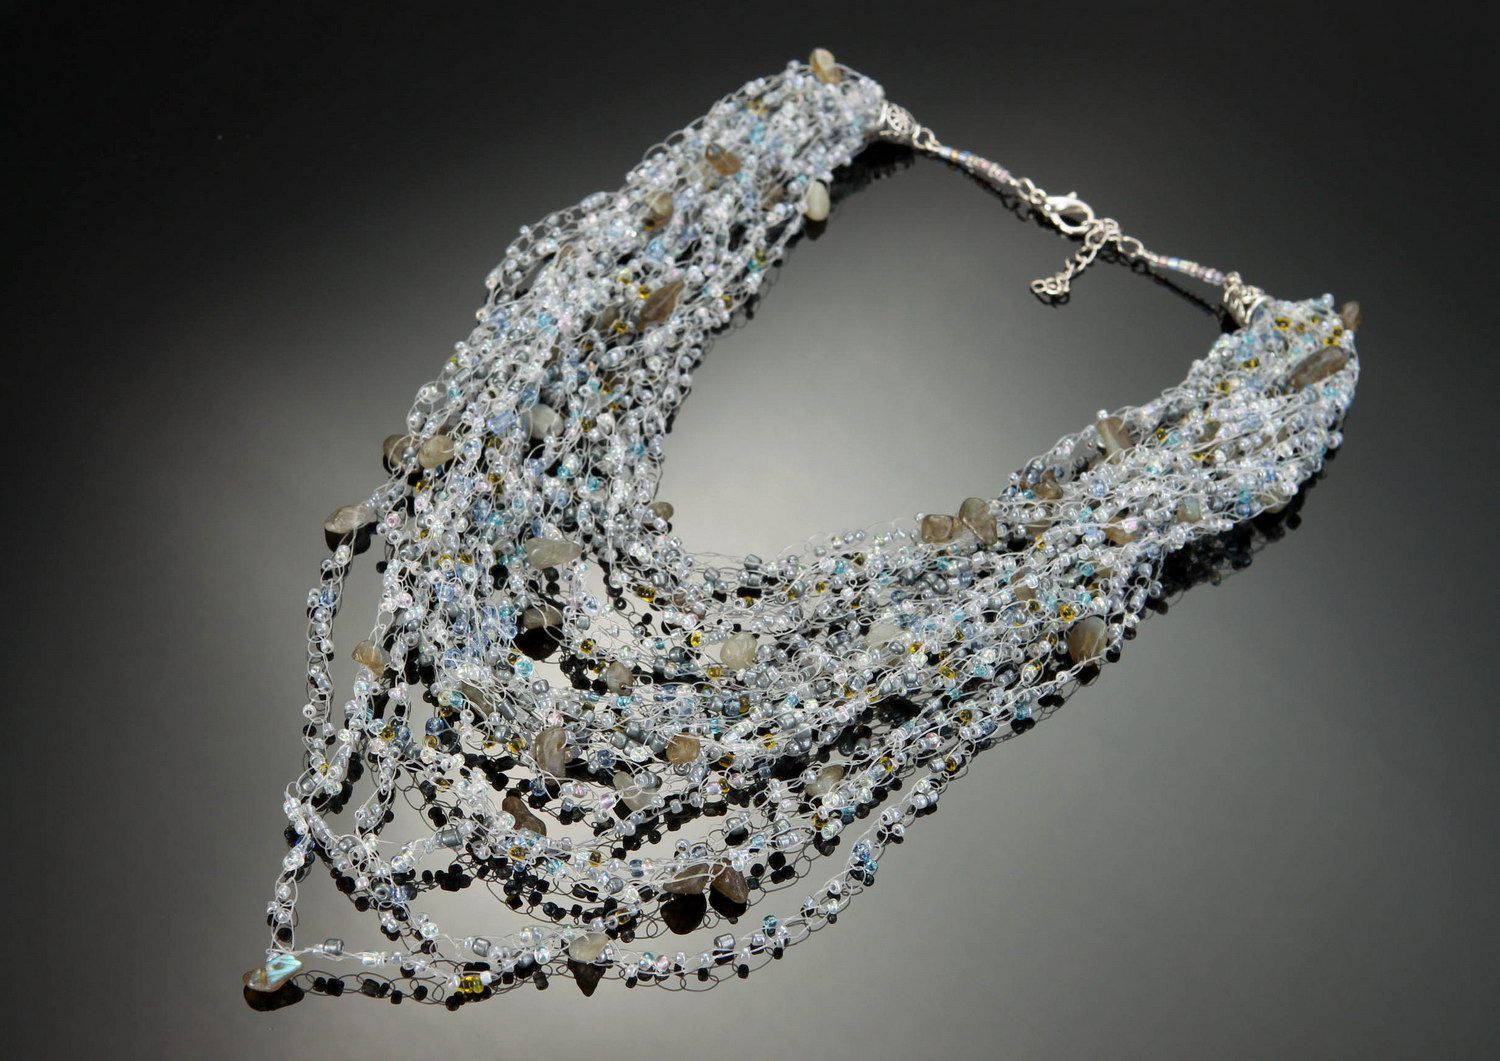 Necklace made of labradorite fragments photo 2